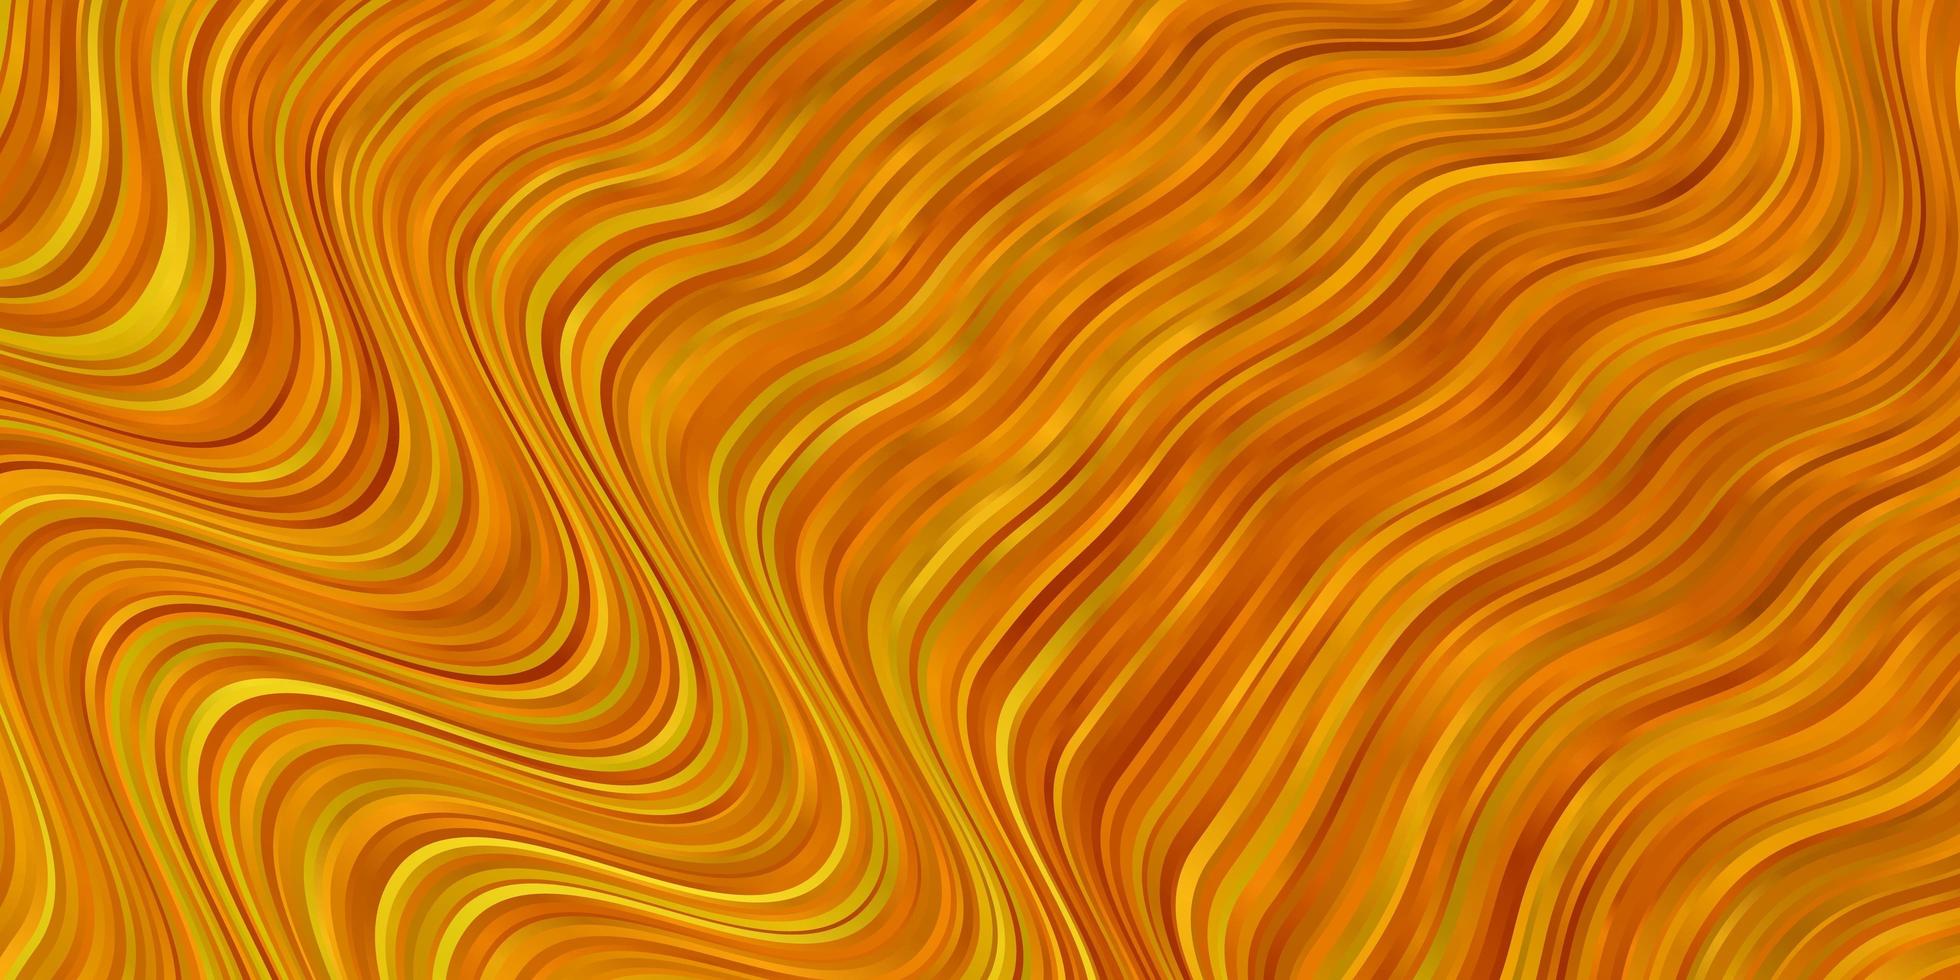 ljus orange vektor konsistens med kurvor.